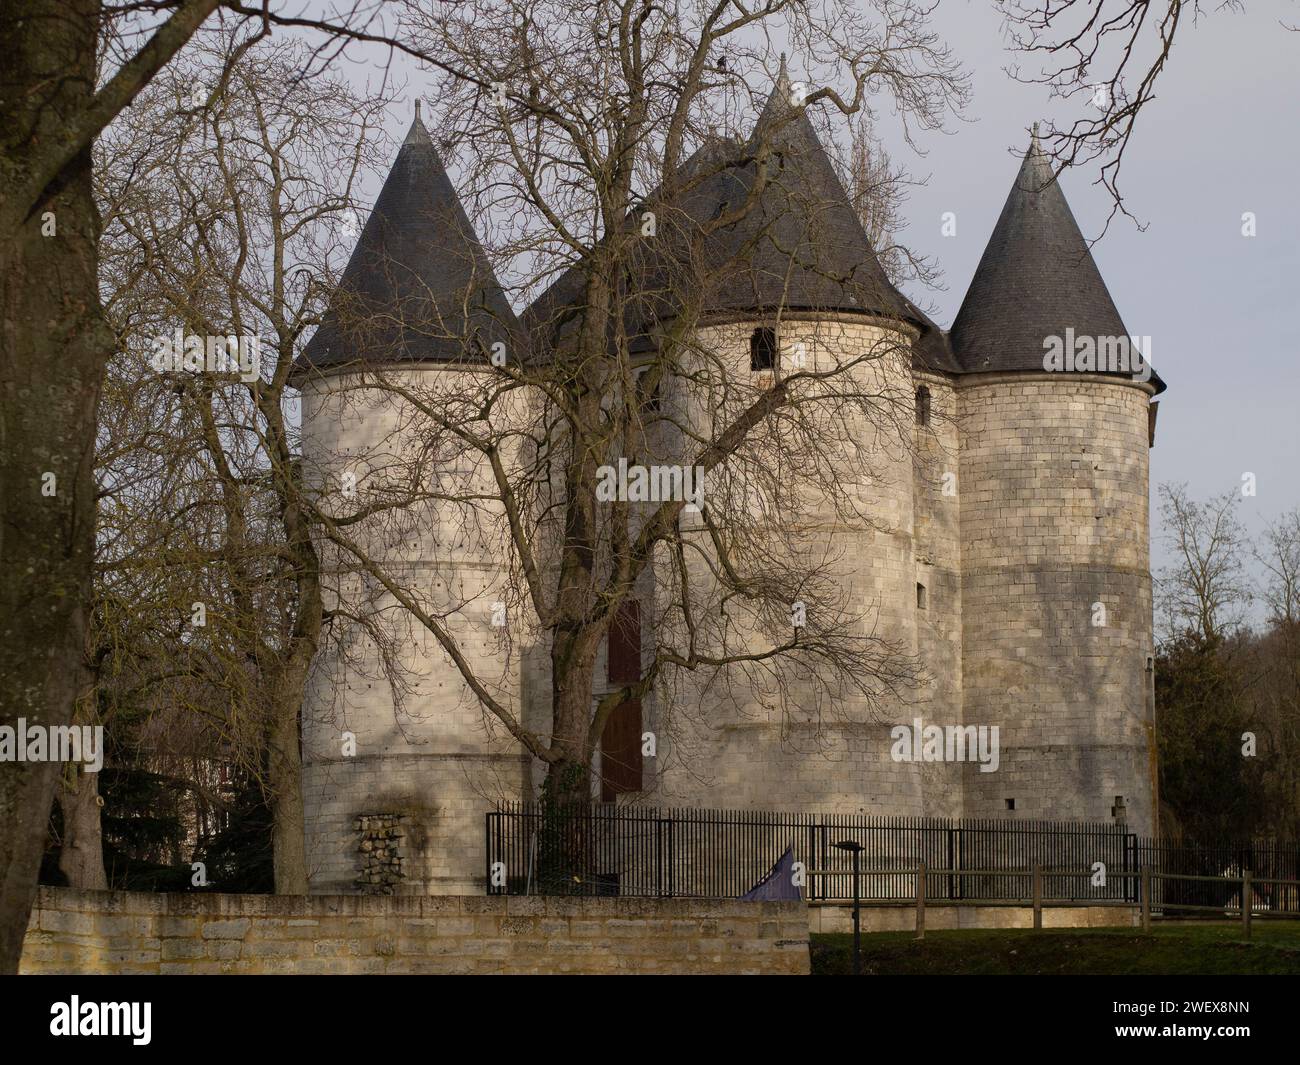 Château des Tourelles a Vernon, Eure, Francia | Castello medievale in pietra con torri gemelle circondate da alberi, sotto un cielo limpido. Foto Stock